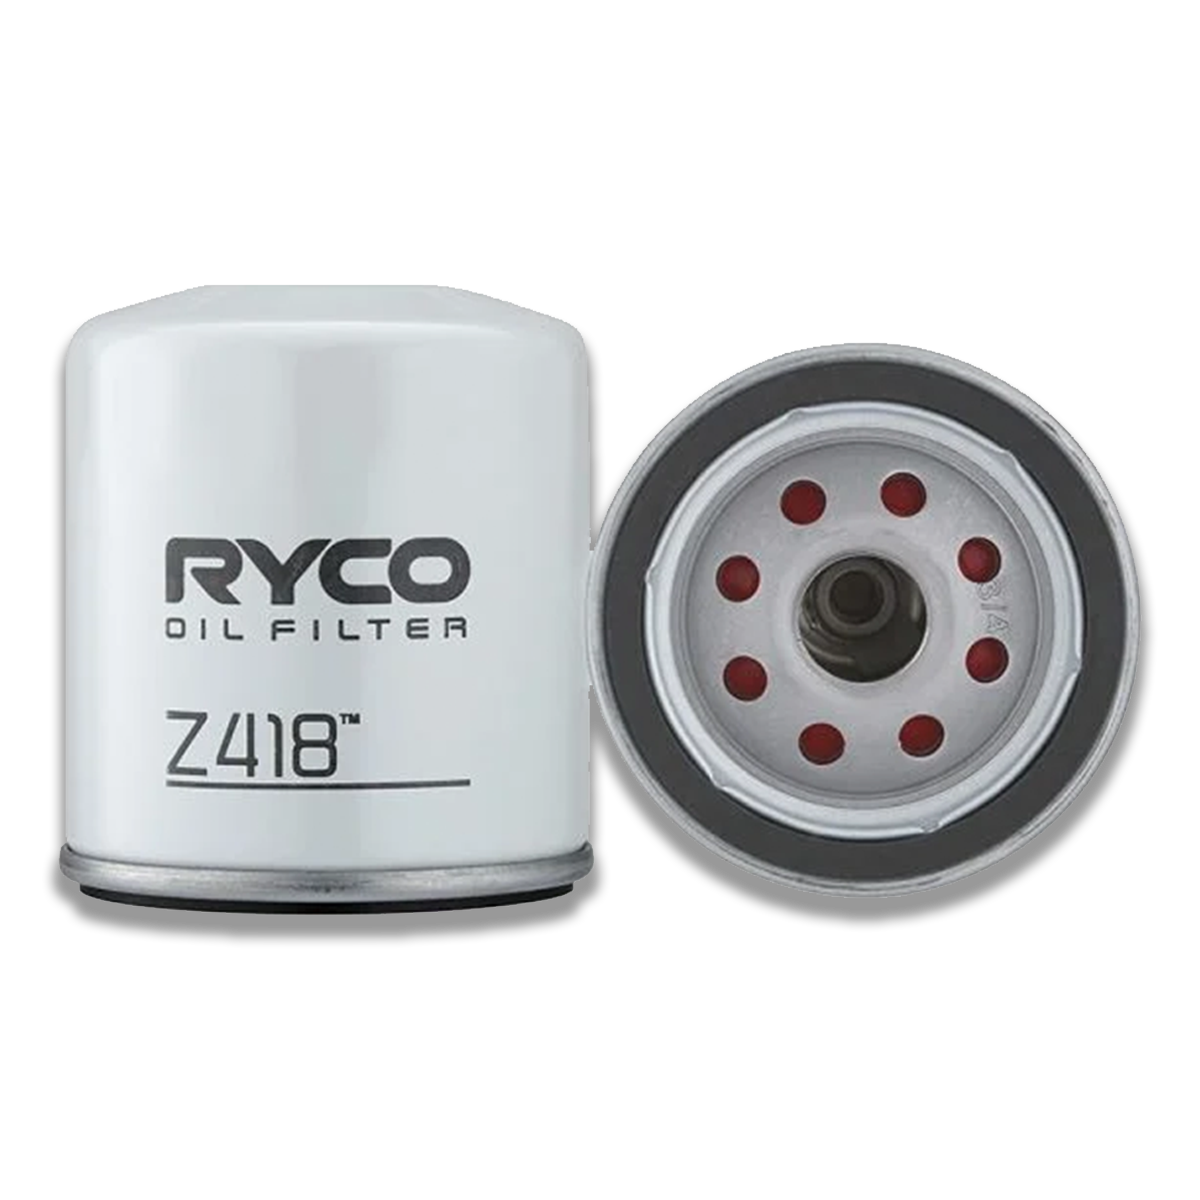 Ryco - Z418 Oil Filter for 3.8L JK Wrangler 2007 to 2012